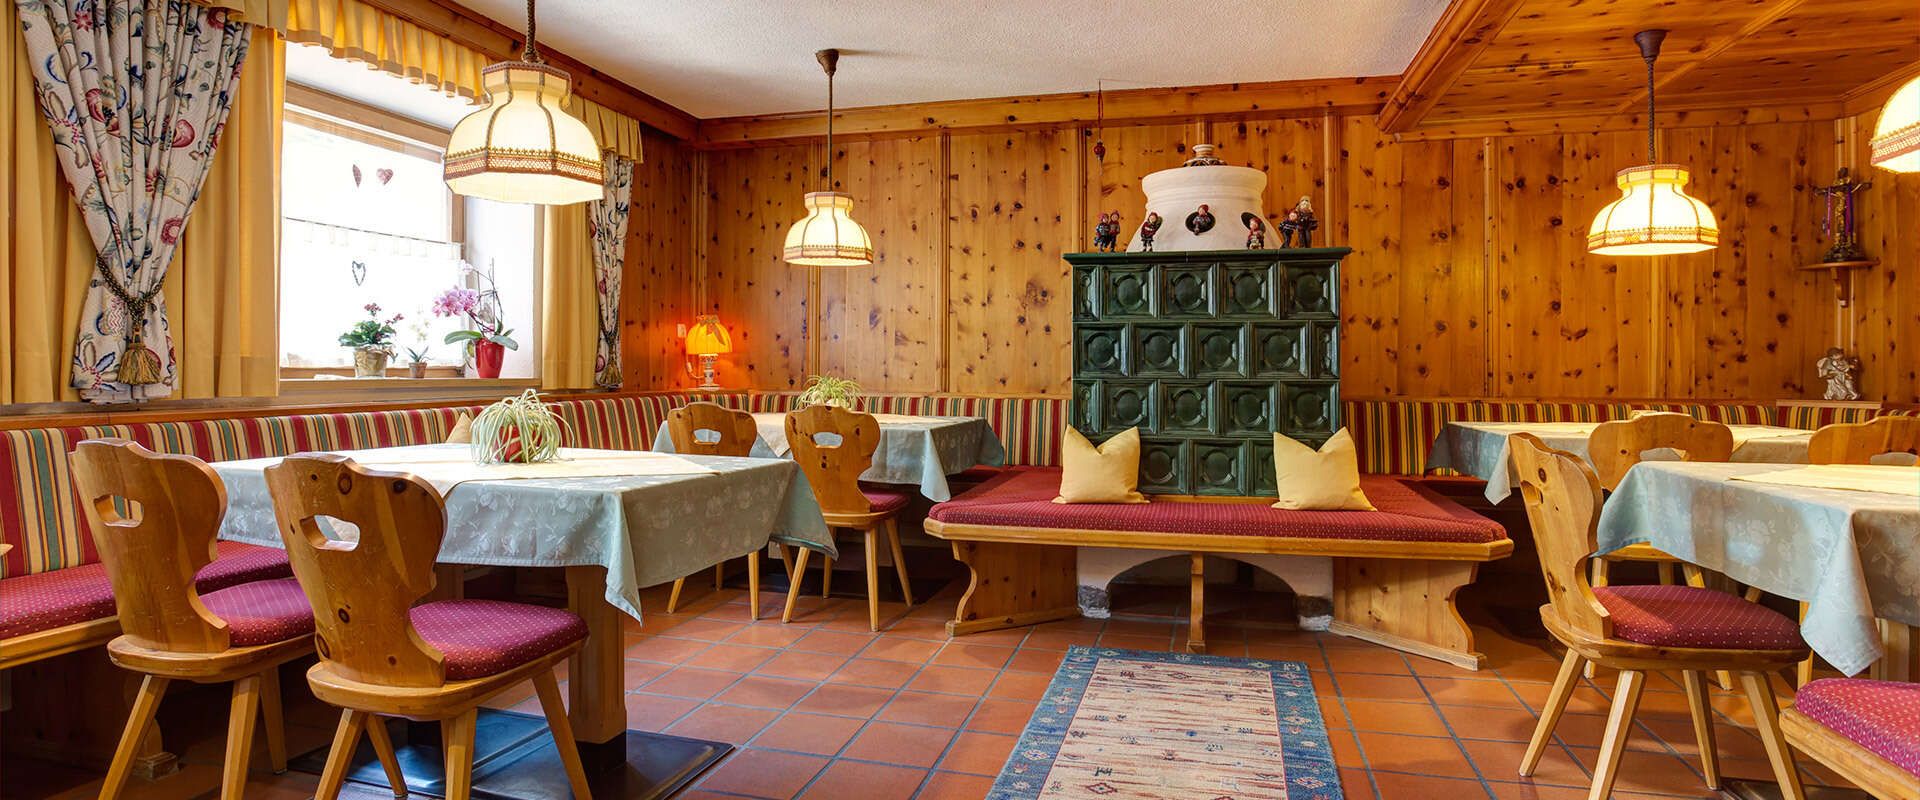 Frühstücksraum in der Pension Roman in Pettneu am Arlberg